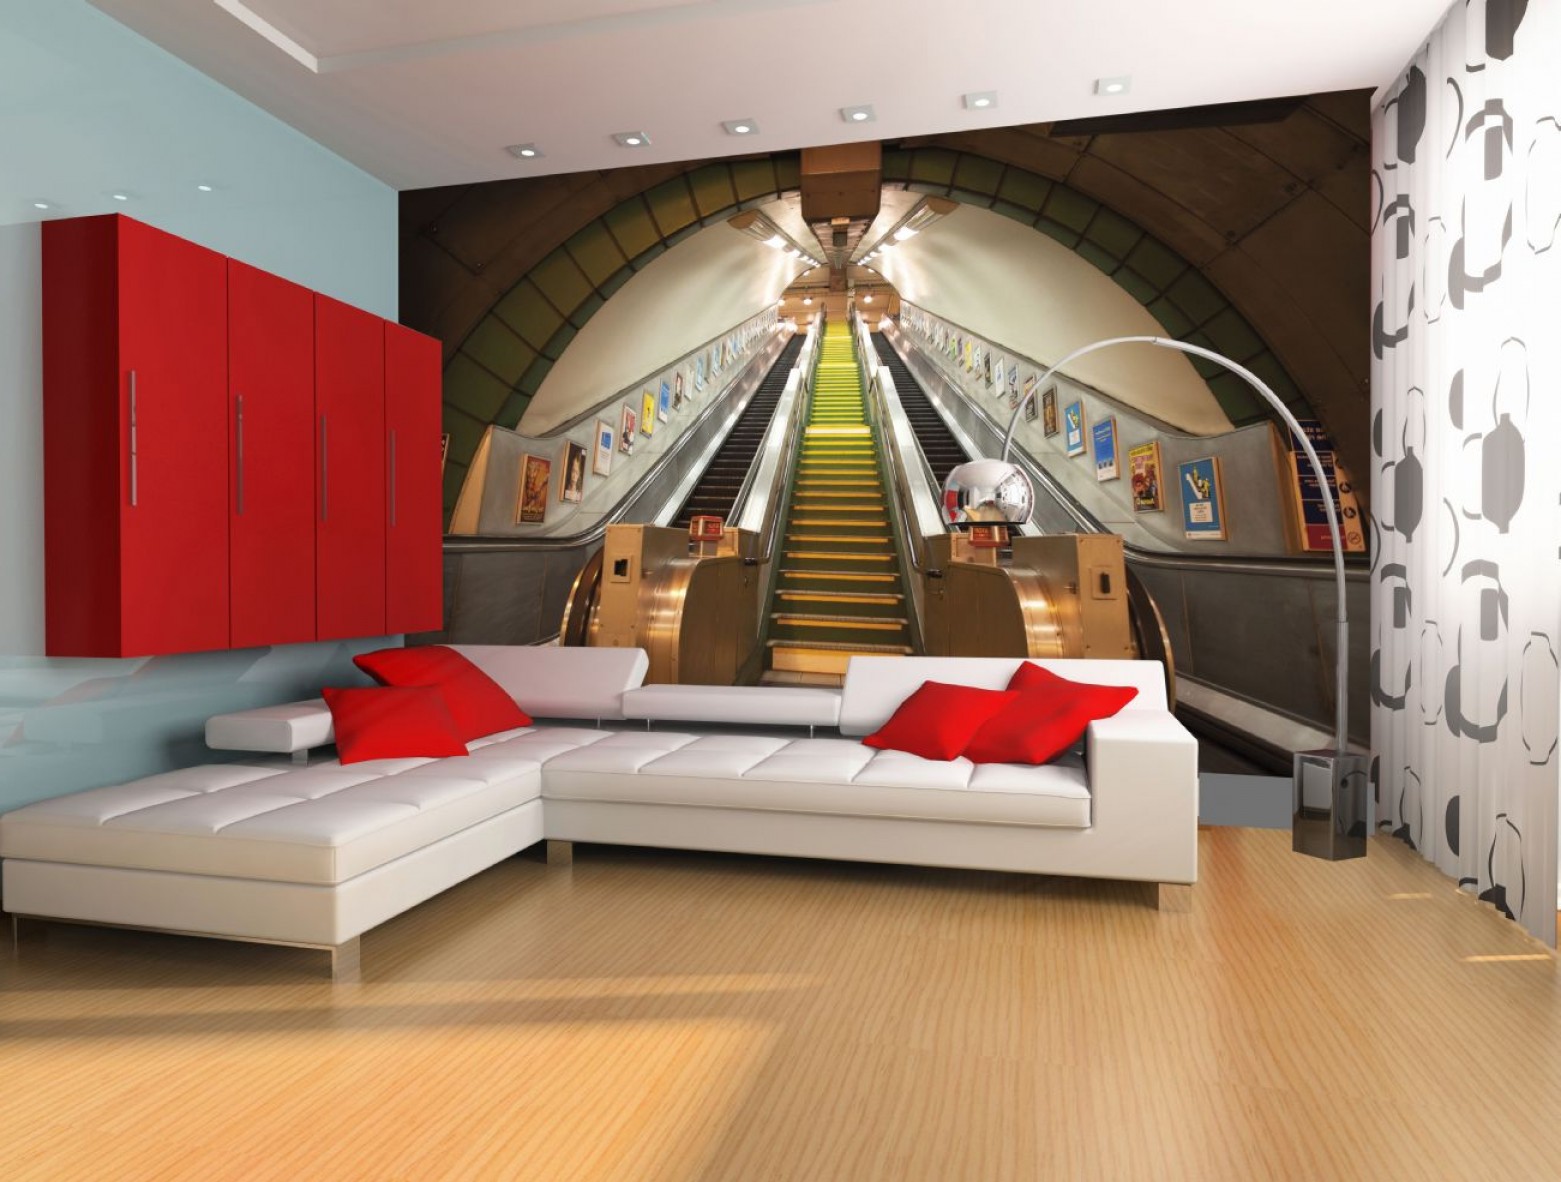 Train Themed Bedroom - Обои Ночной Город В Интерьере - HD Wallpaper 